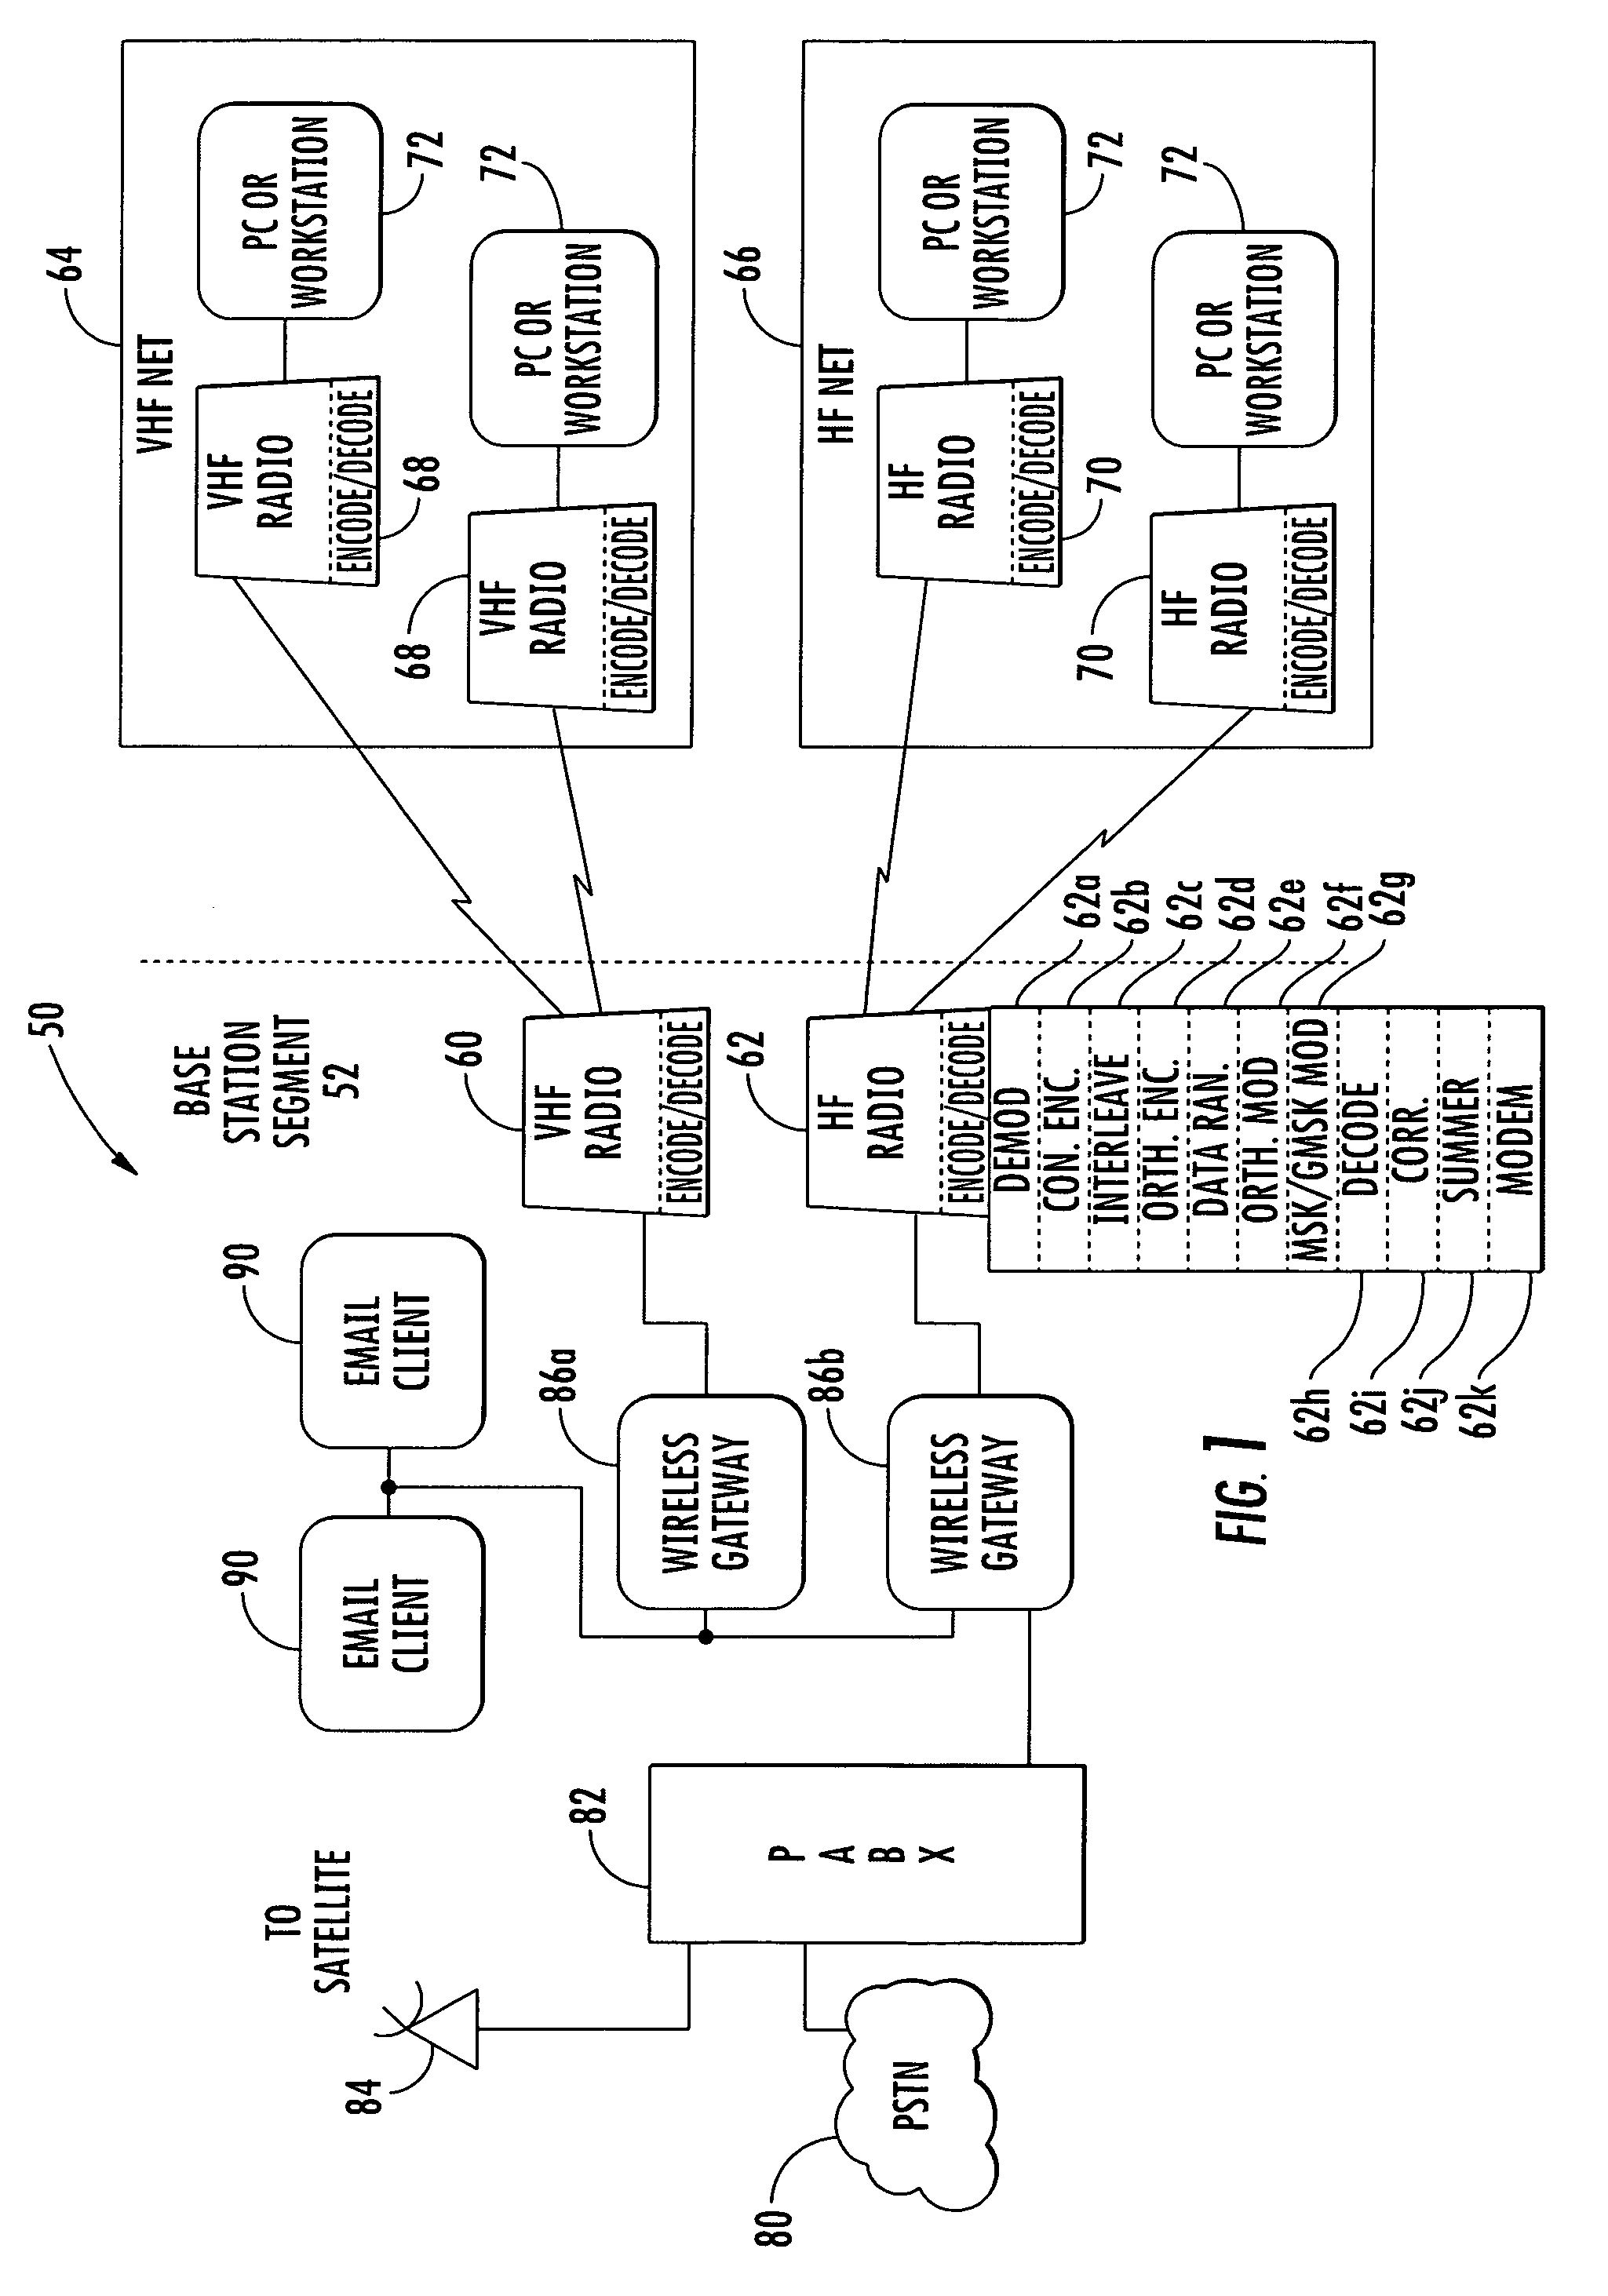 System and method for communicating data using constant amplitude waveform with hybrid orthogonal and MSK or GMSK modulation